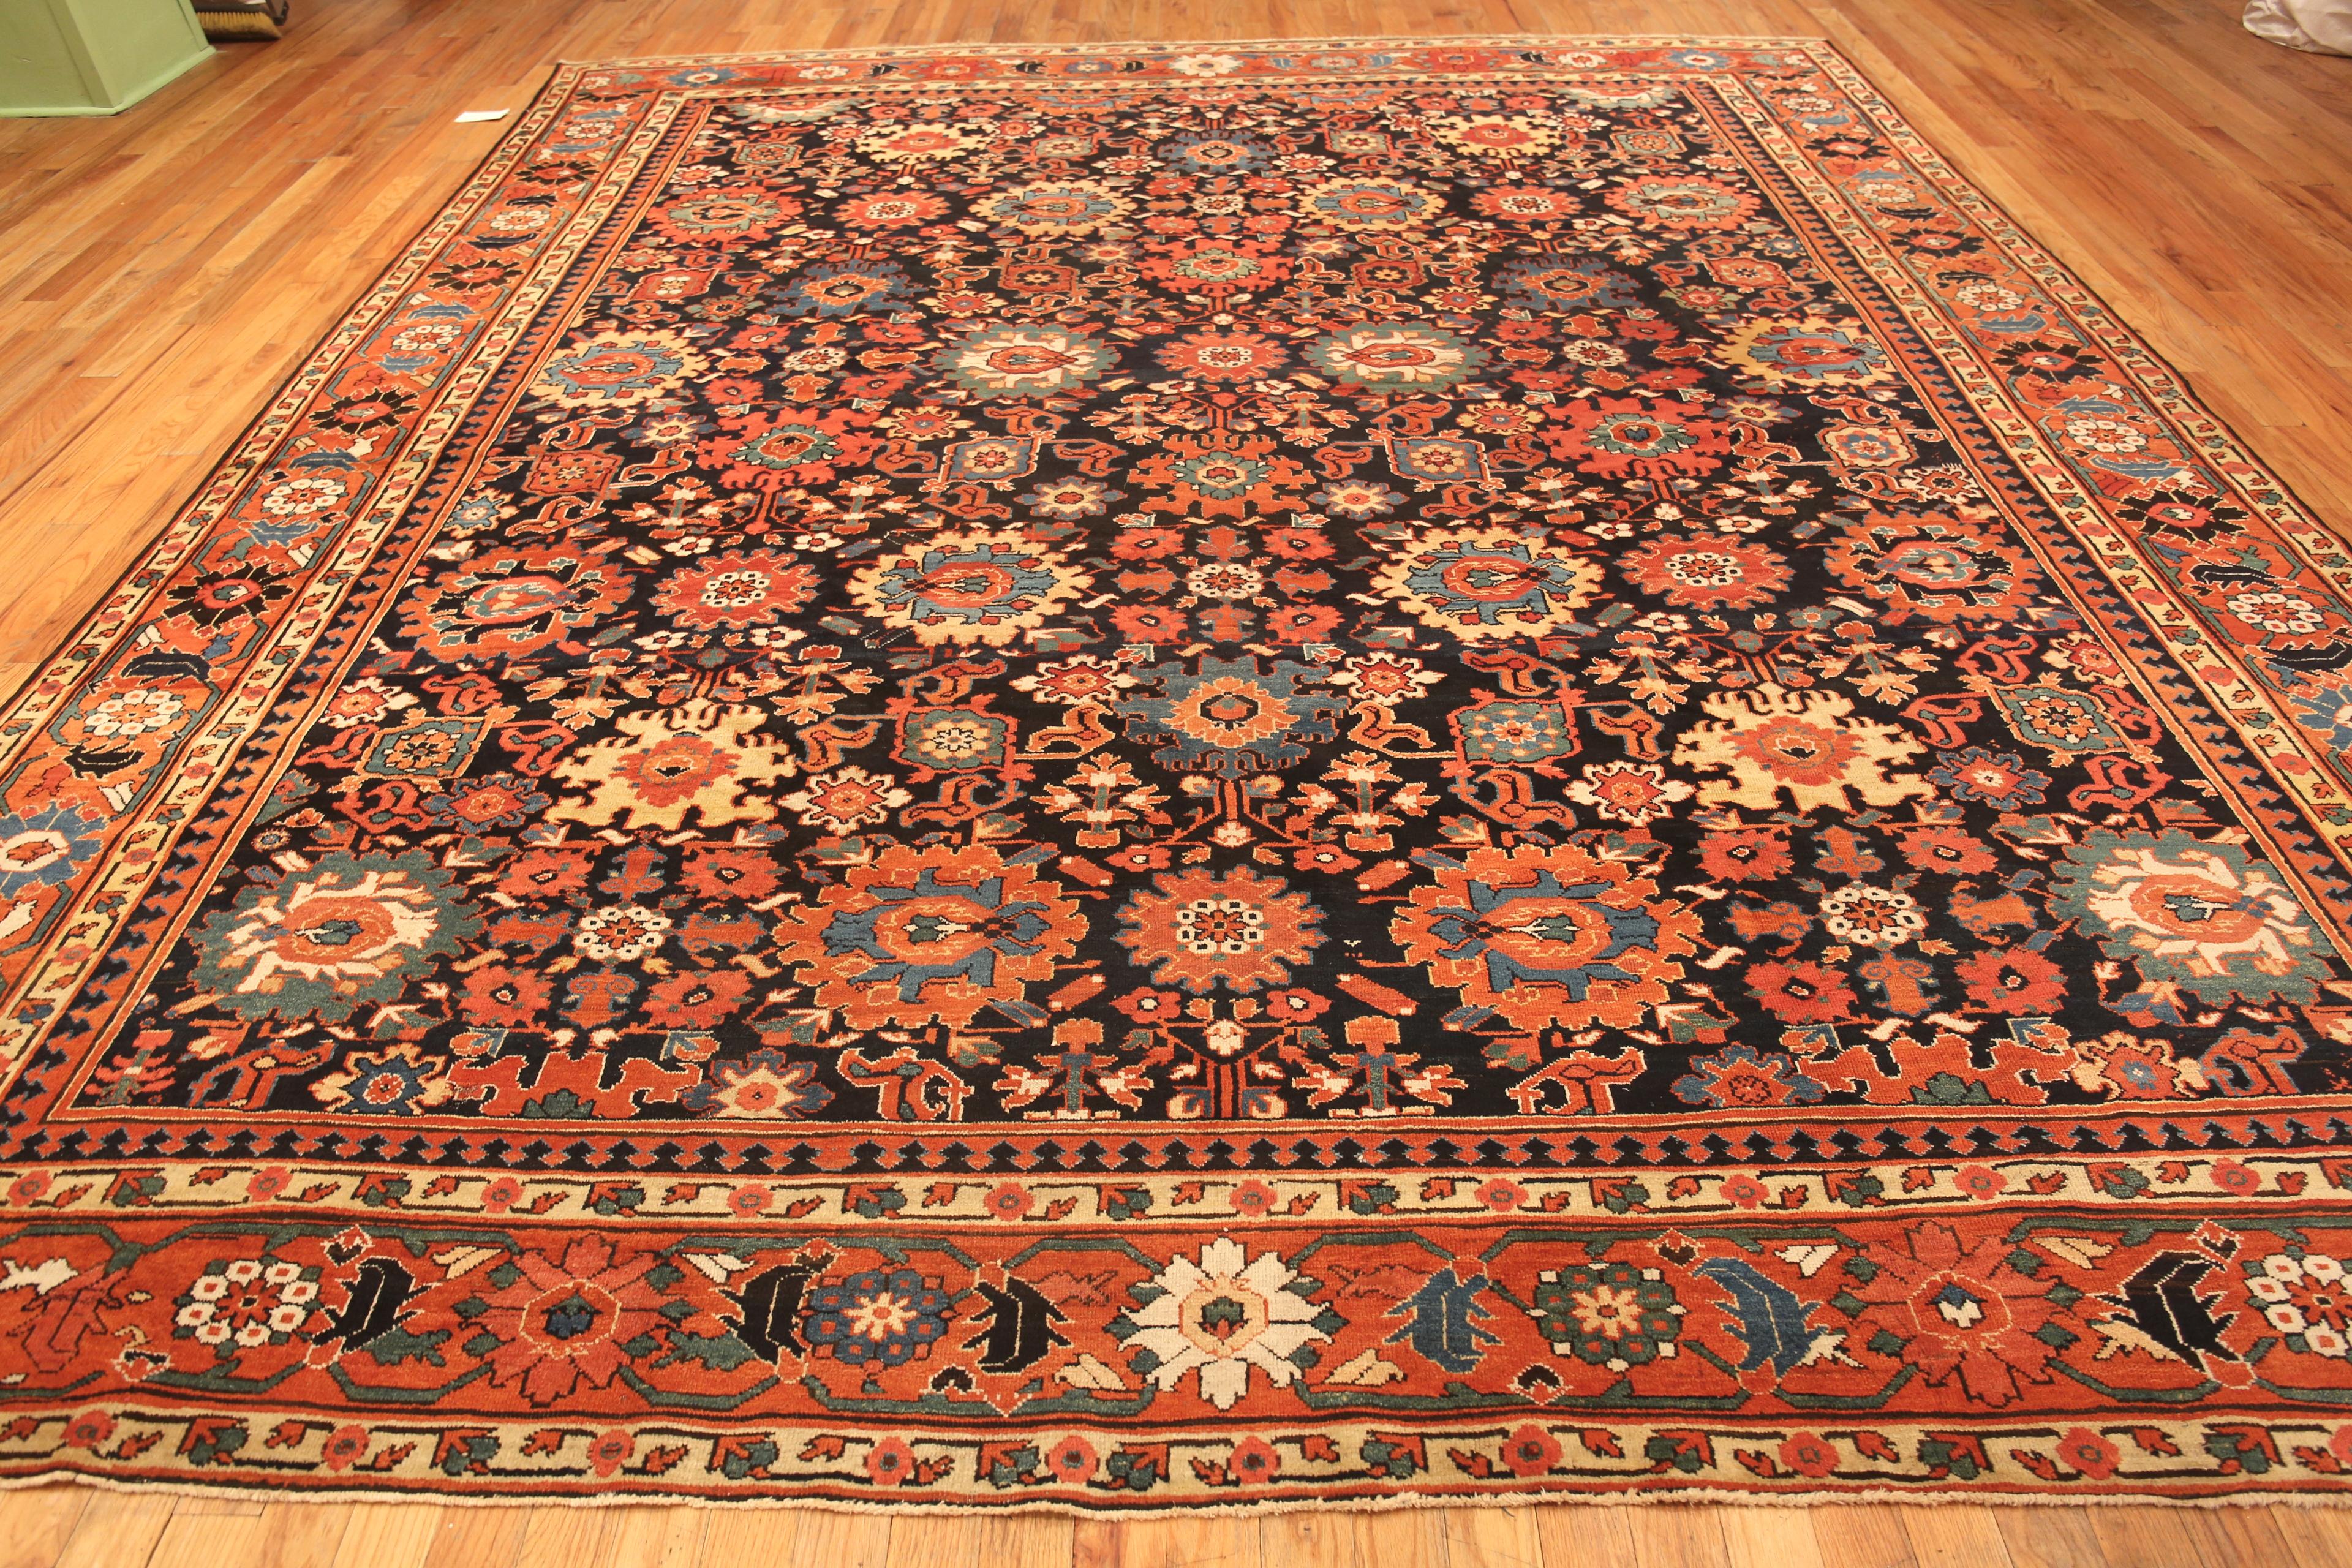 Beautiful Casual Elegant Antique Persian Sultanabad Jewel Tone Rug, Herkunftsland: Persien, CIRCA Datum: 1900. Größe: 12 ft 1 in x 13 ft 10 in (3,68 m x 4,22 m)

 